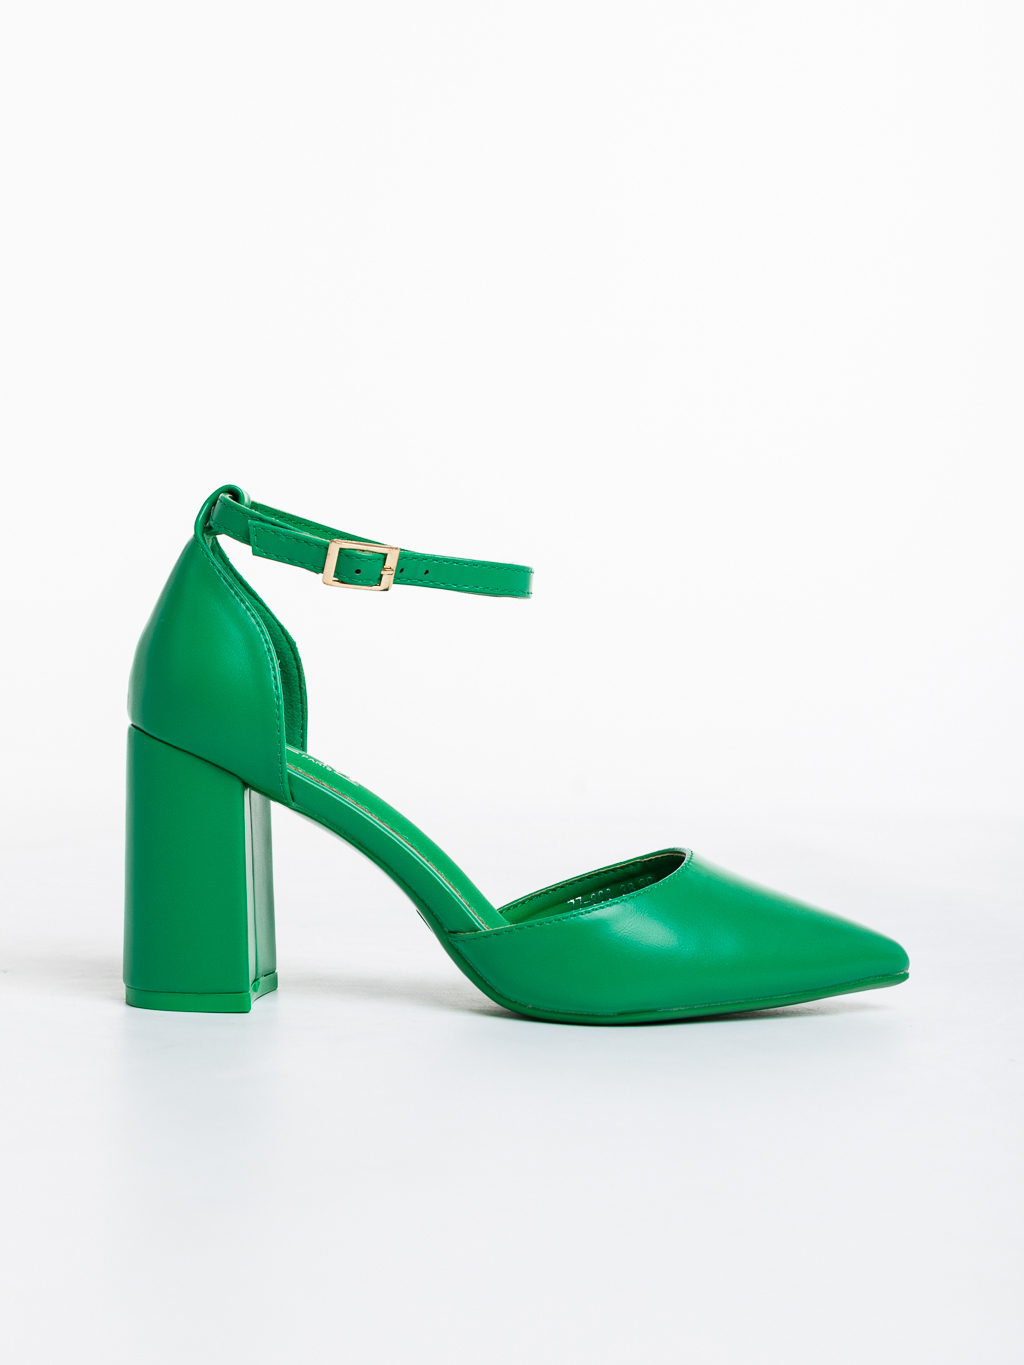 Pantofi dama verzi din piele ecologica Ravza, 5 - Kalapod.net